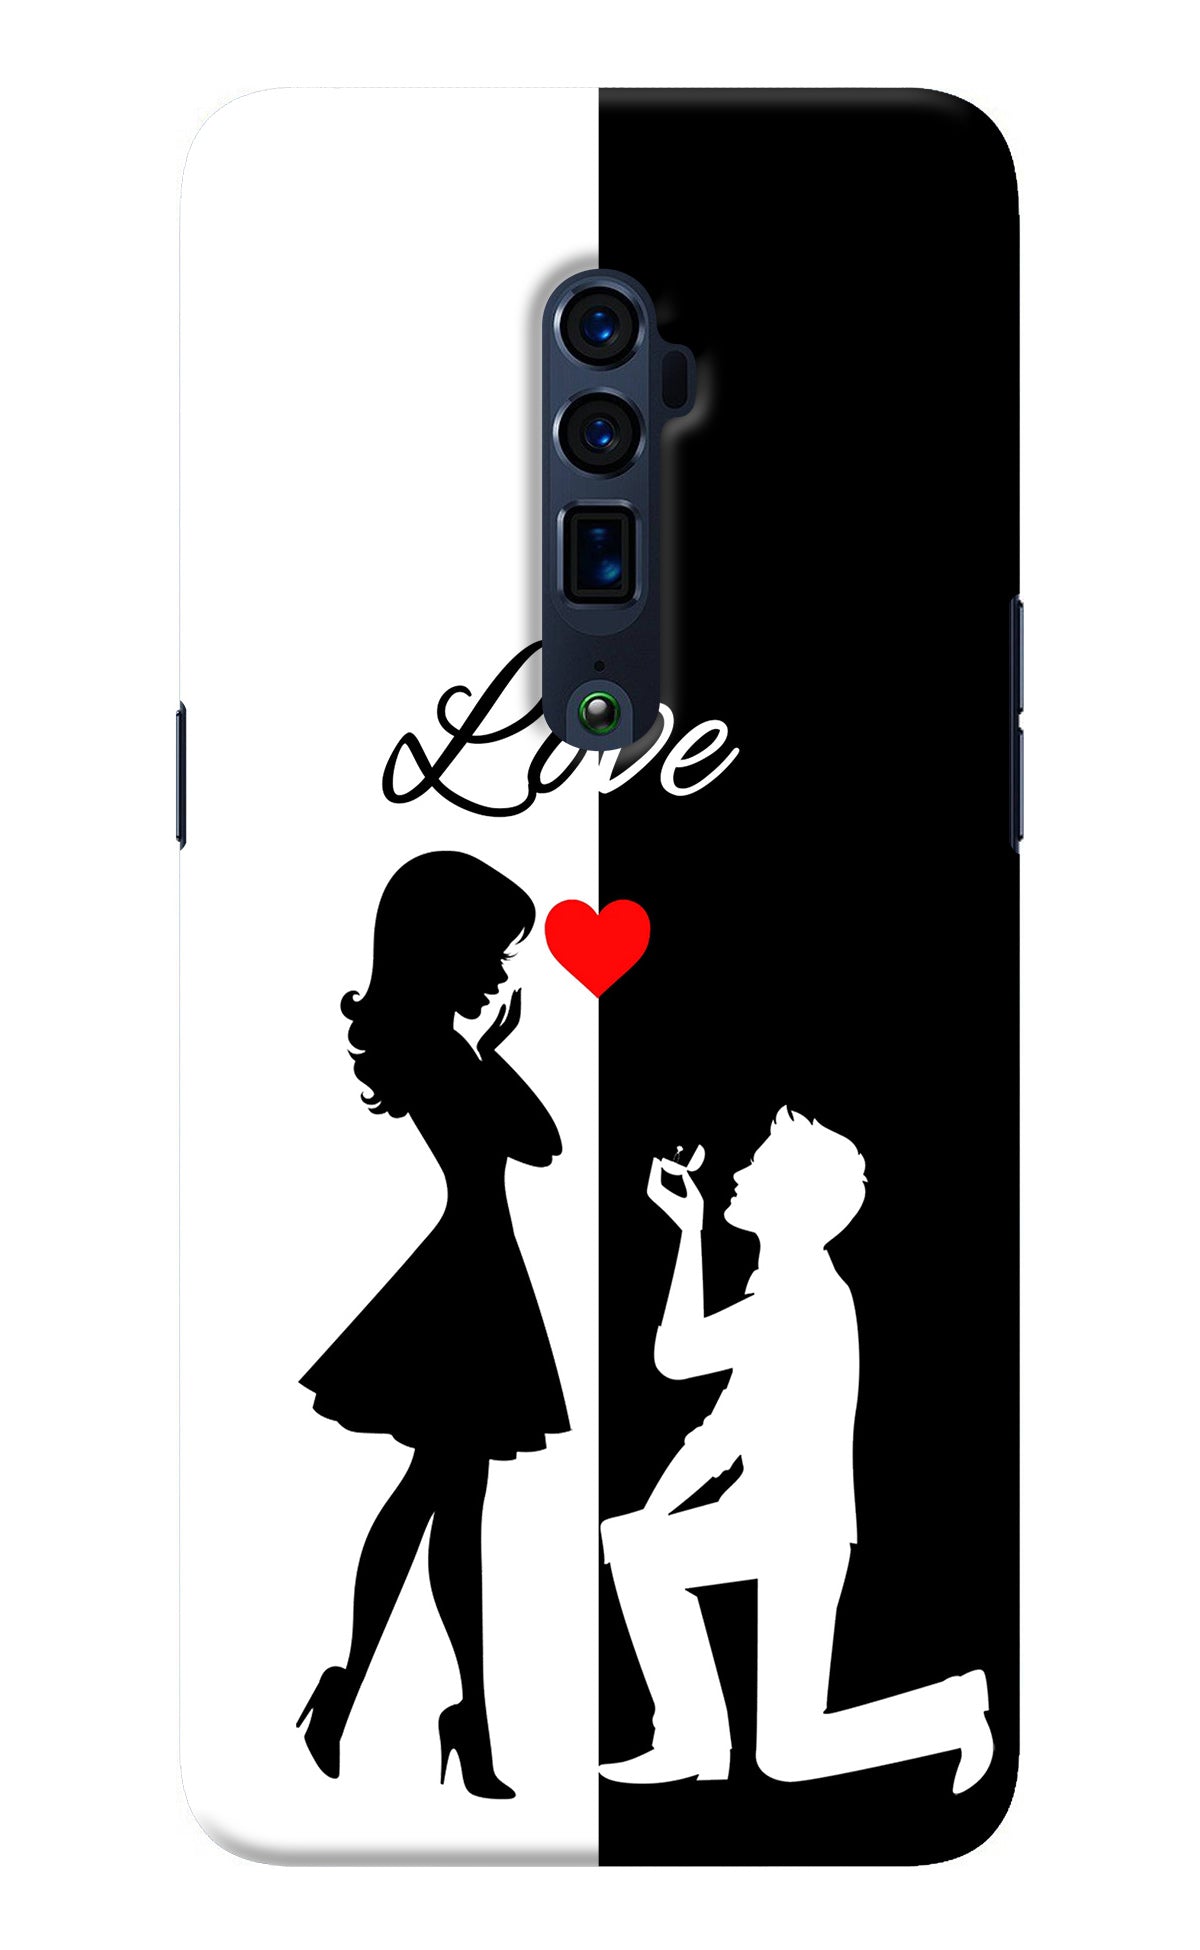 Love Propose Black And White Oppo Reno 10x Zoom Back Cover